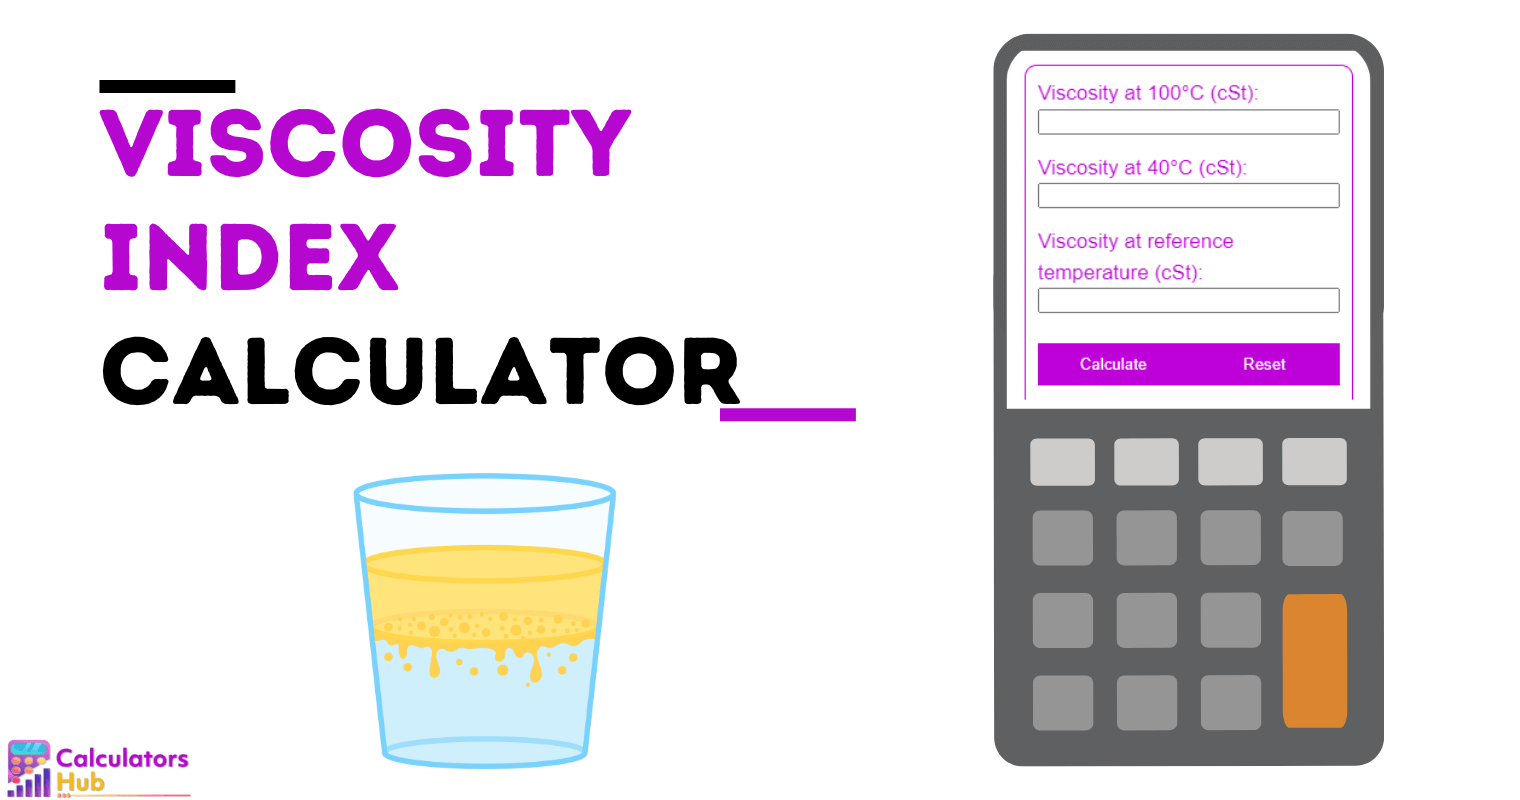 Viscosity Index Calculator